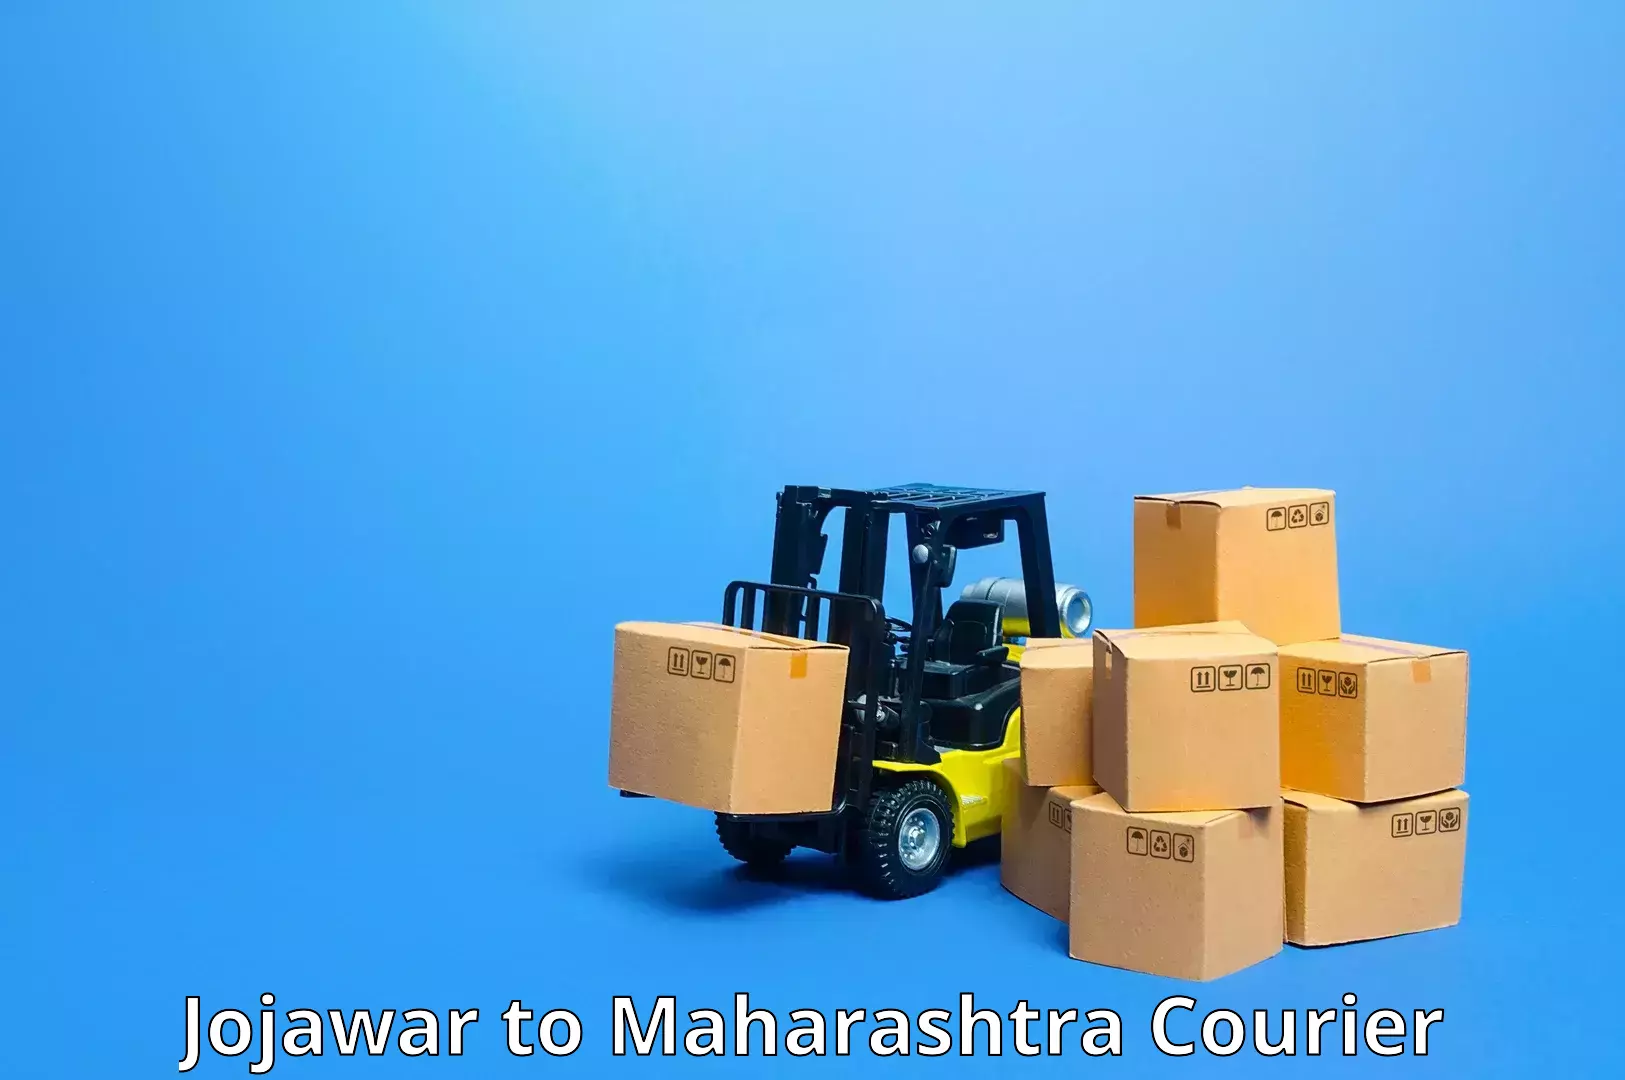 Courier service comparison Jojawar to Chembur